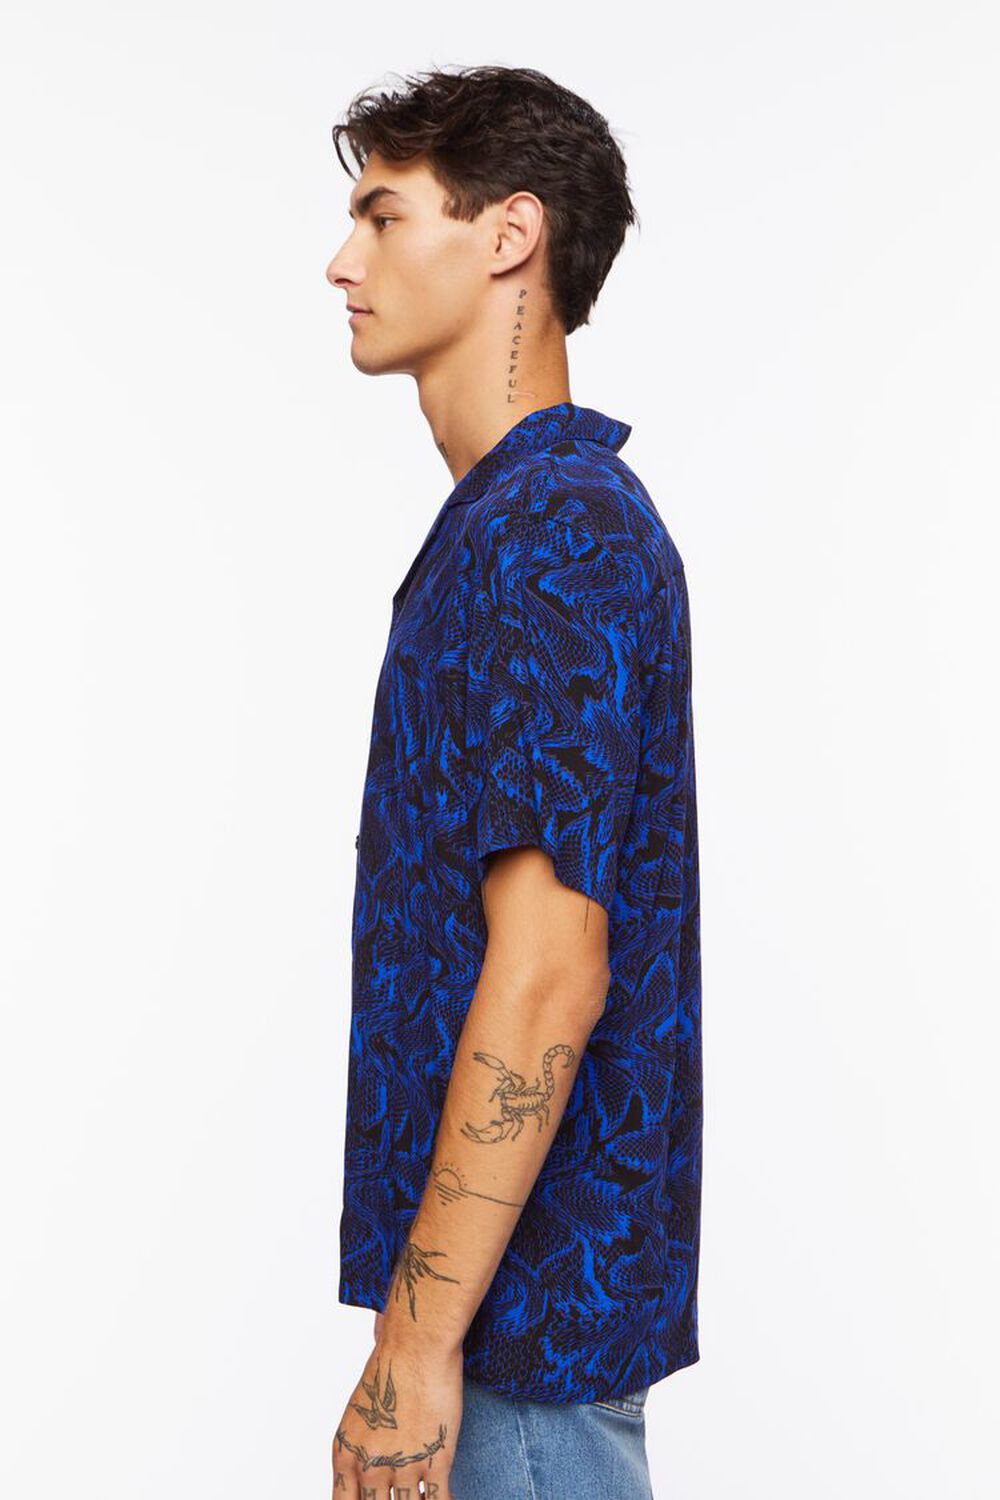 BLACK/BLUE Abstract Snakeskin Shirt, image 2